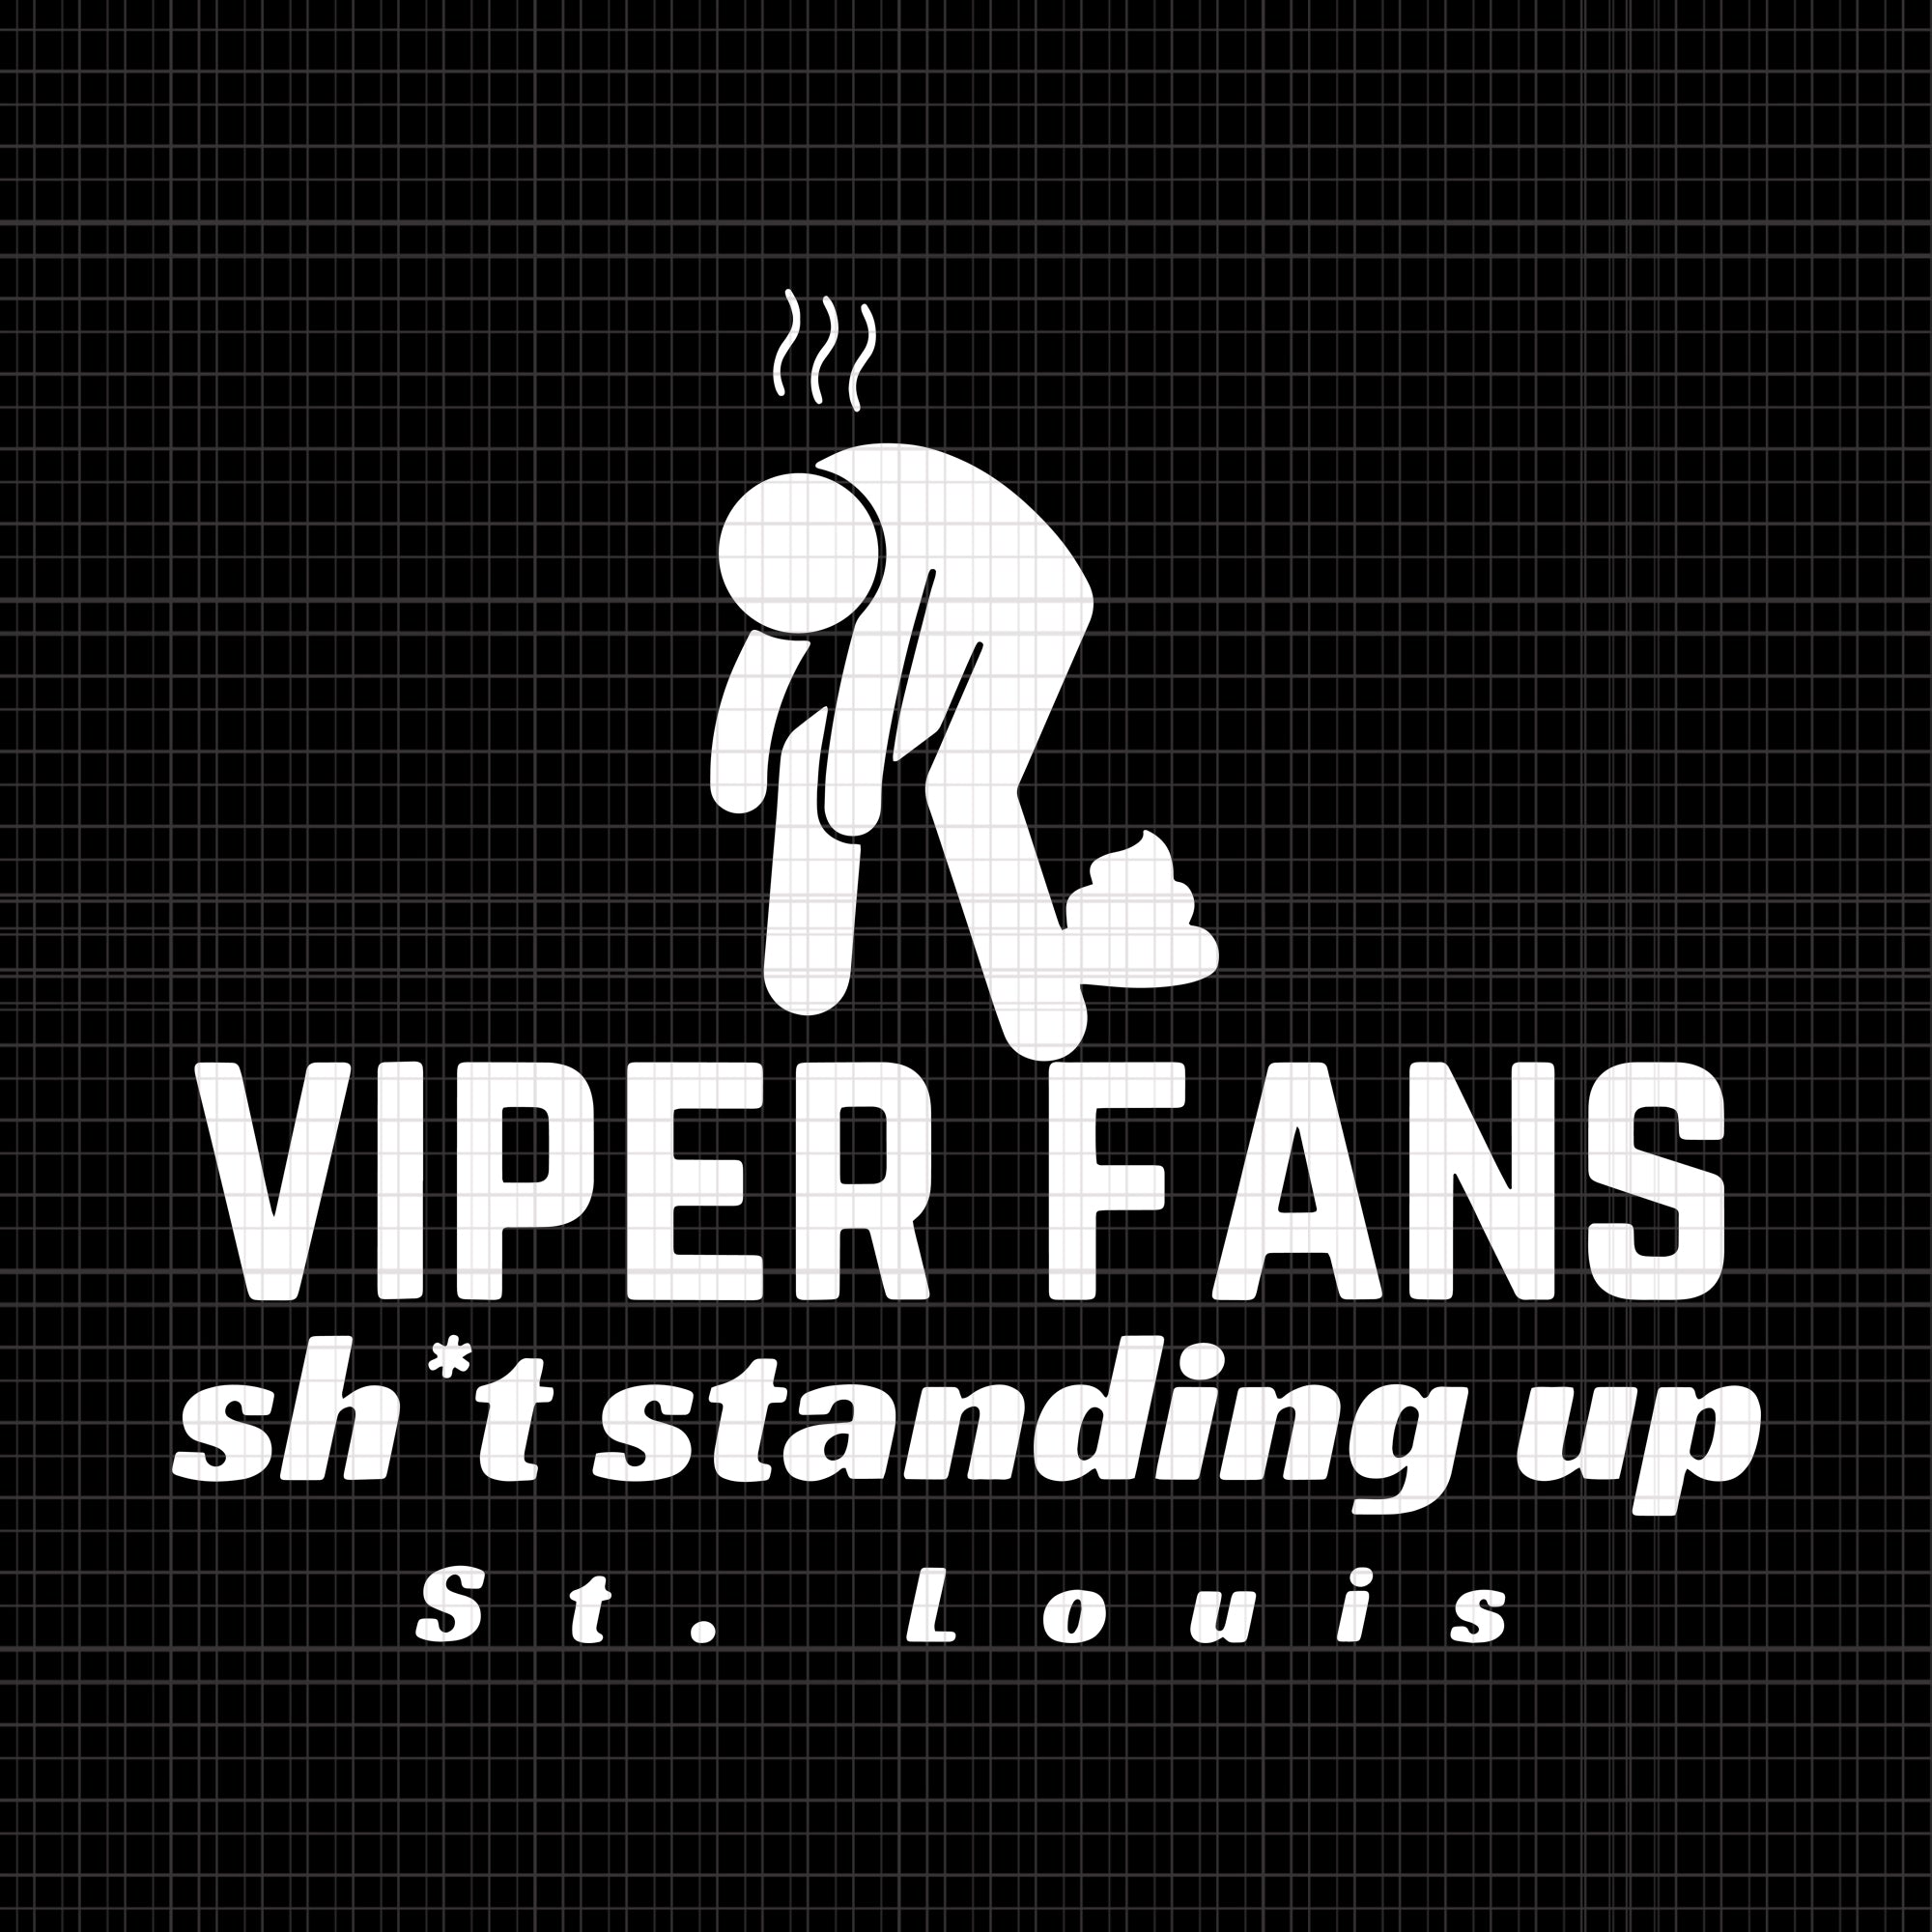 Viper fans sh*t standing up svg,viper fans sh*t standing up png,viper fans sh*t standing up shirt,st. louis football rival fans svg,st. louis football rival fans